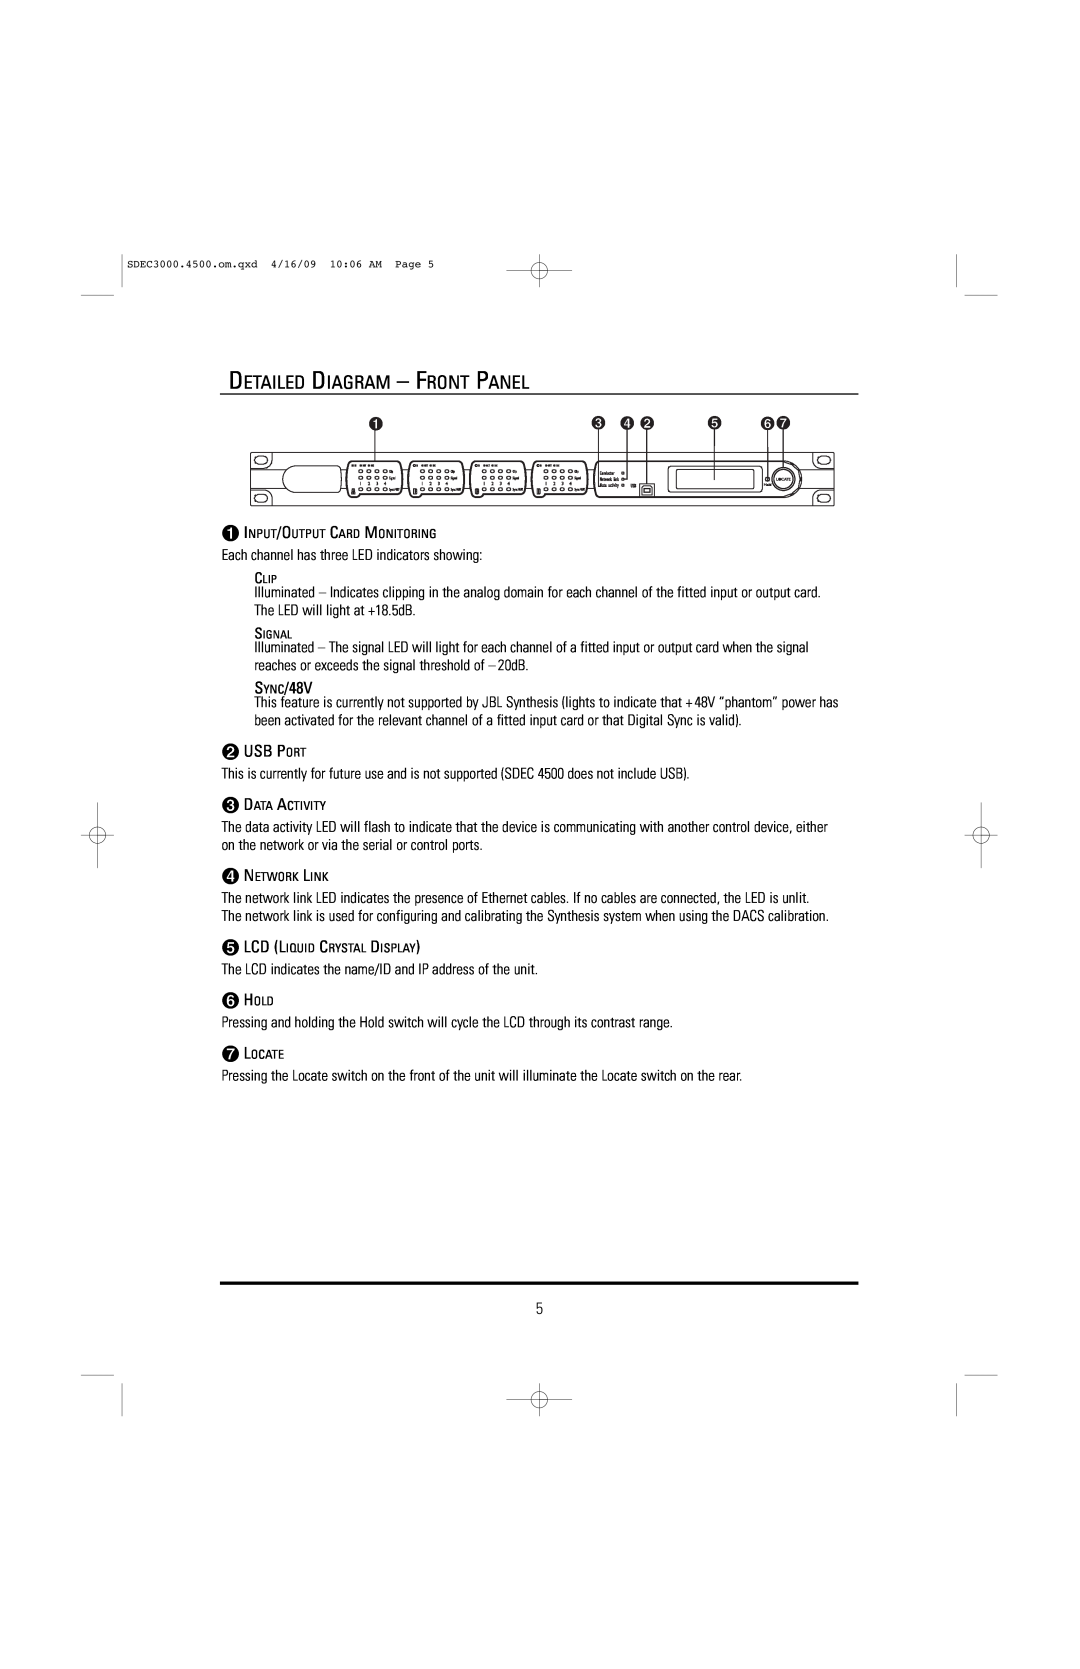 JBL SDEC-4500P, SDEC-4500X manual Detailed Diagram - Front Panel, SYNC/48V, Usb Port 